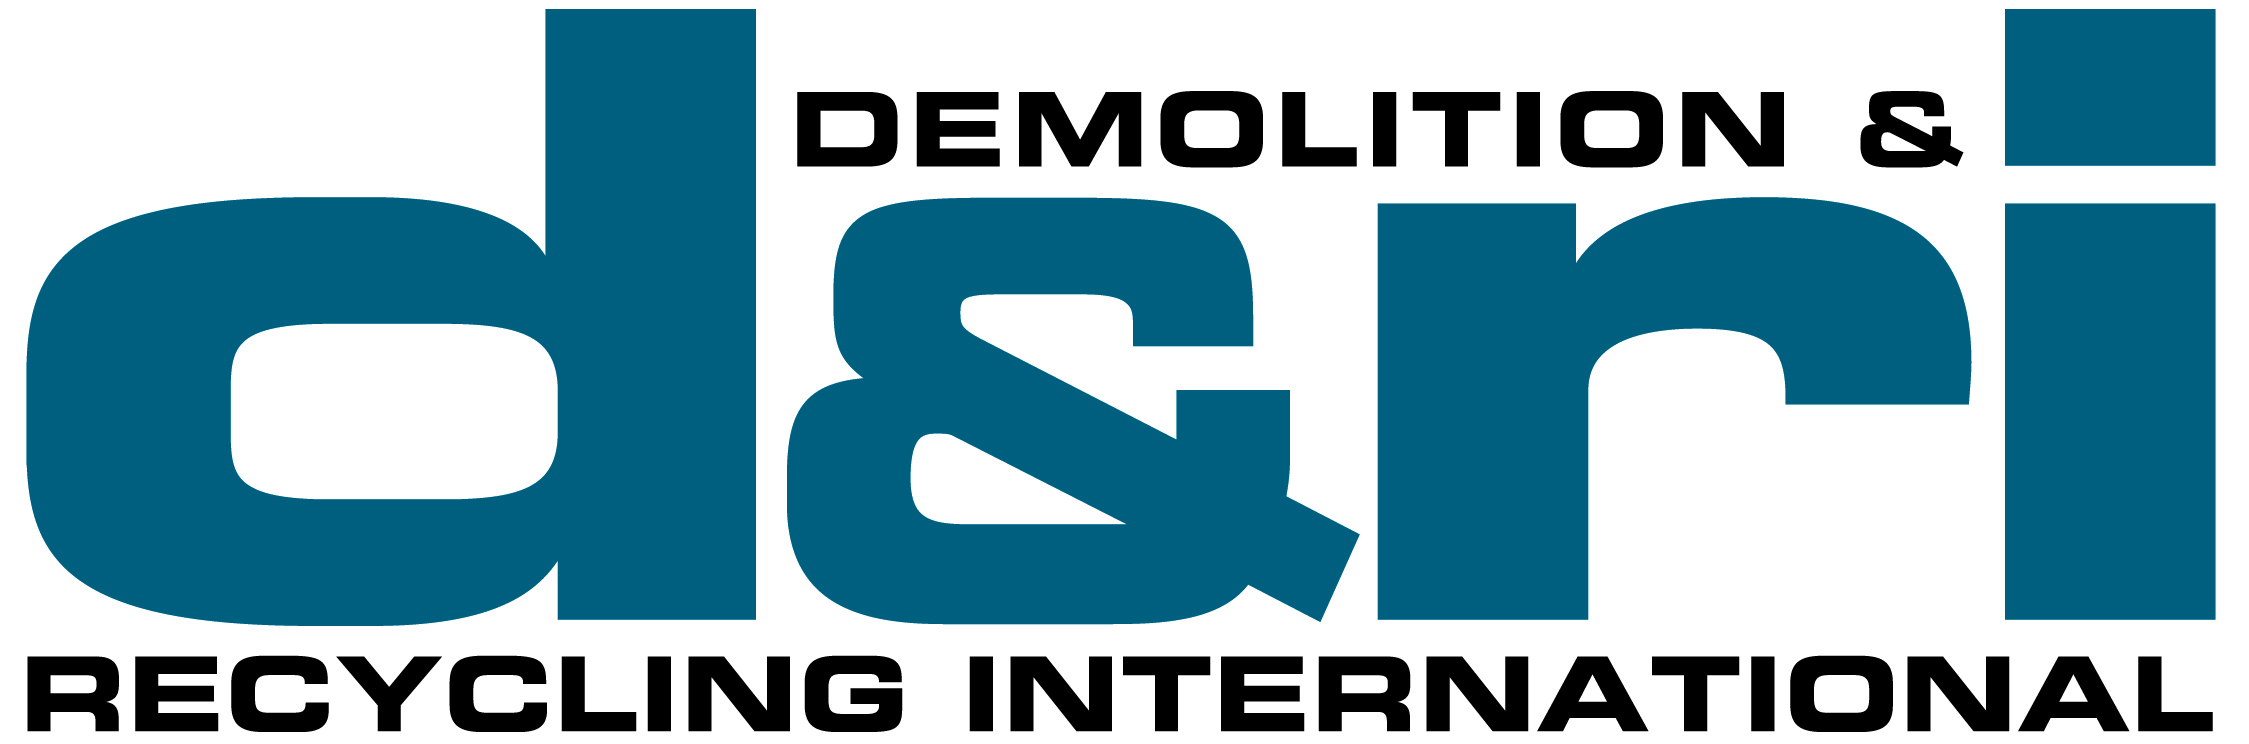 D&RI - Demolition and Recycling International